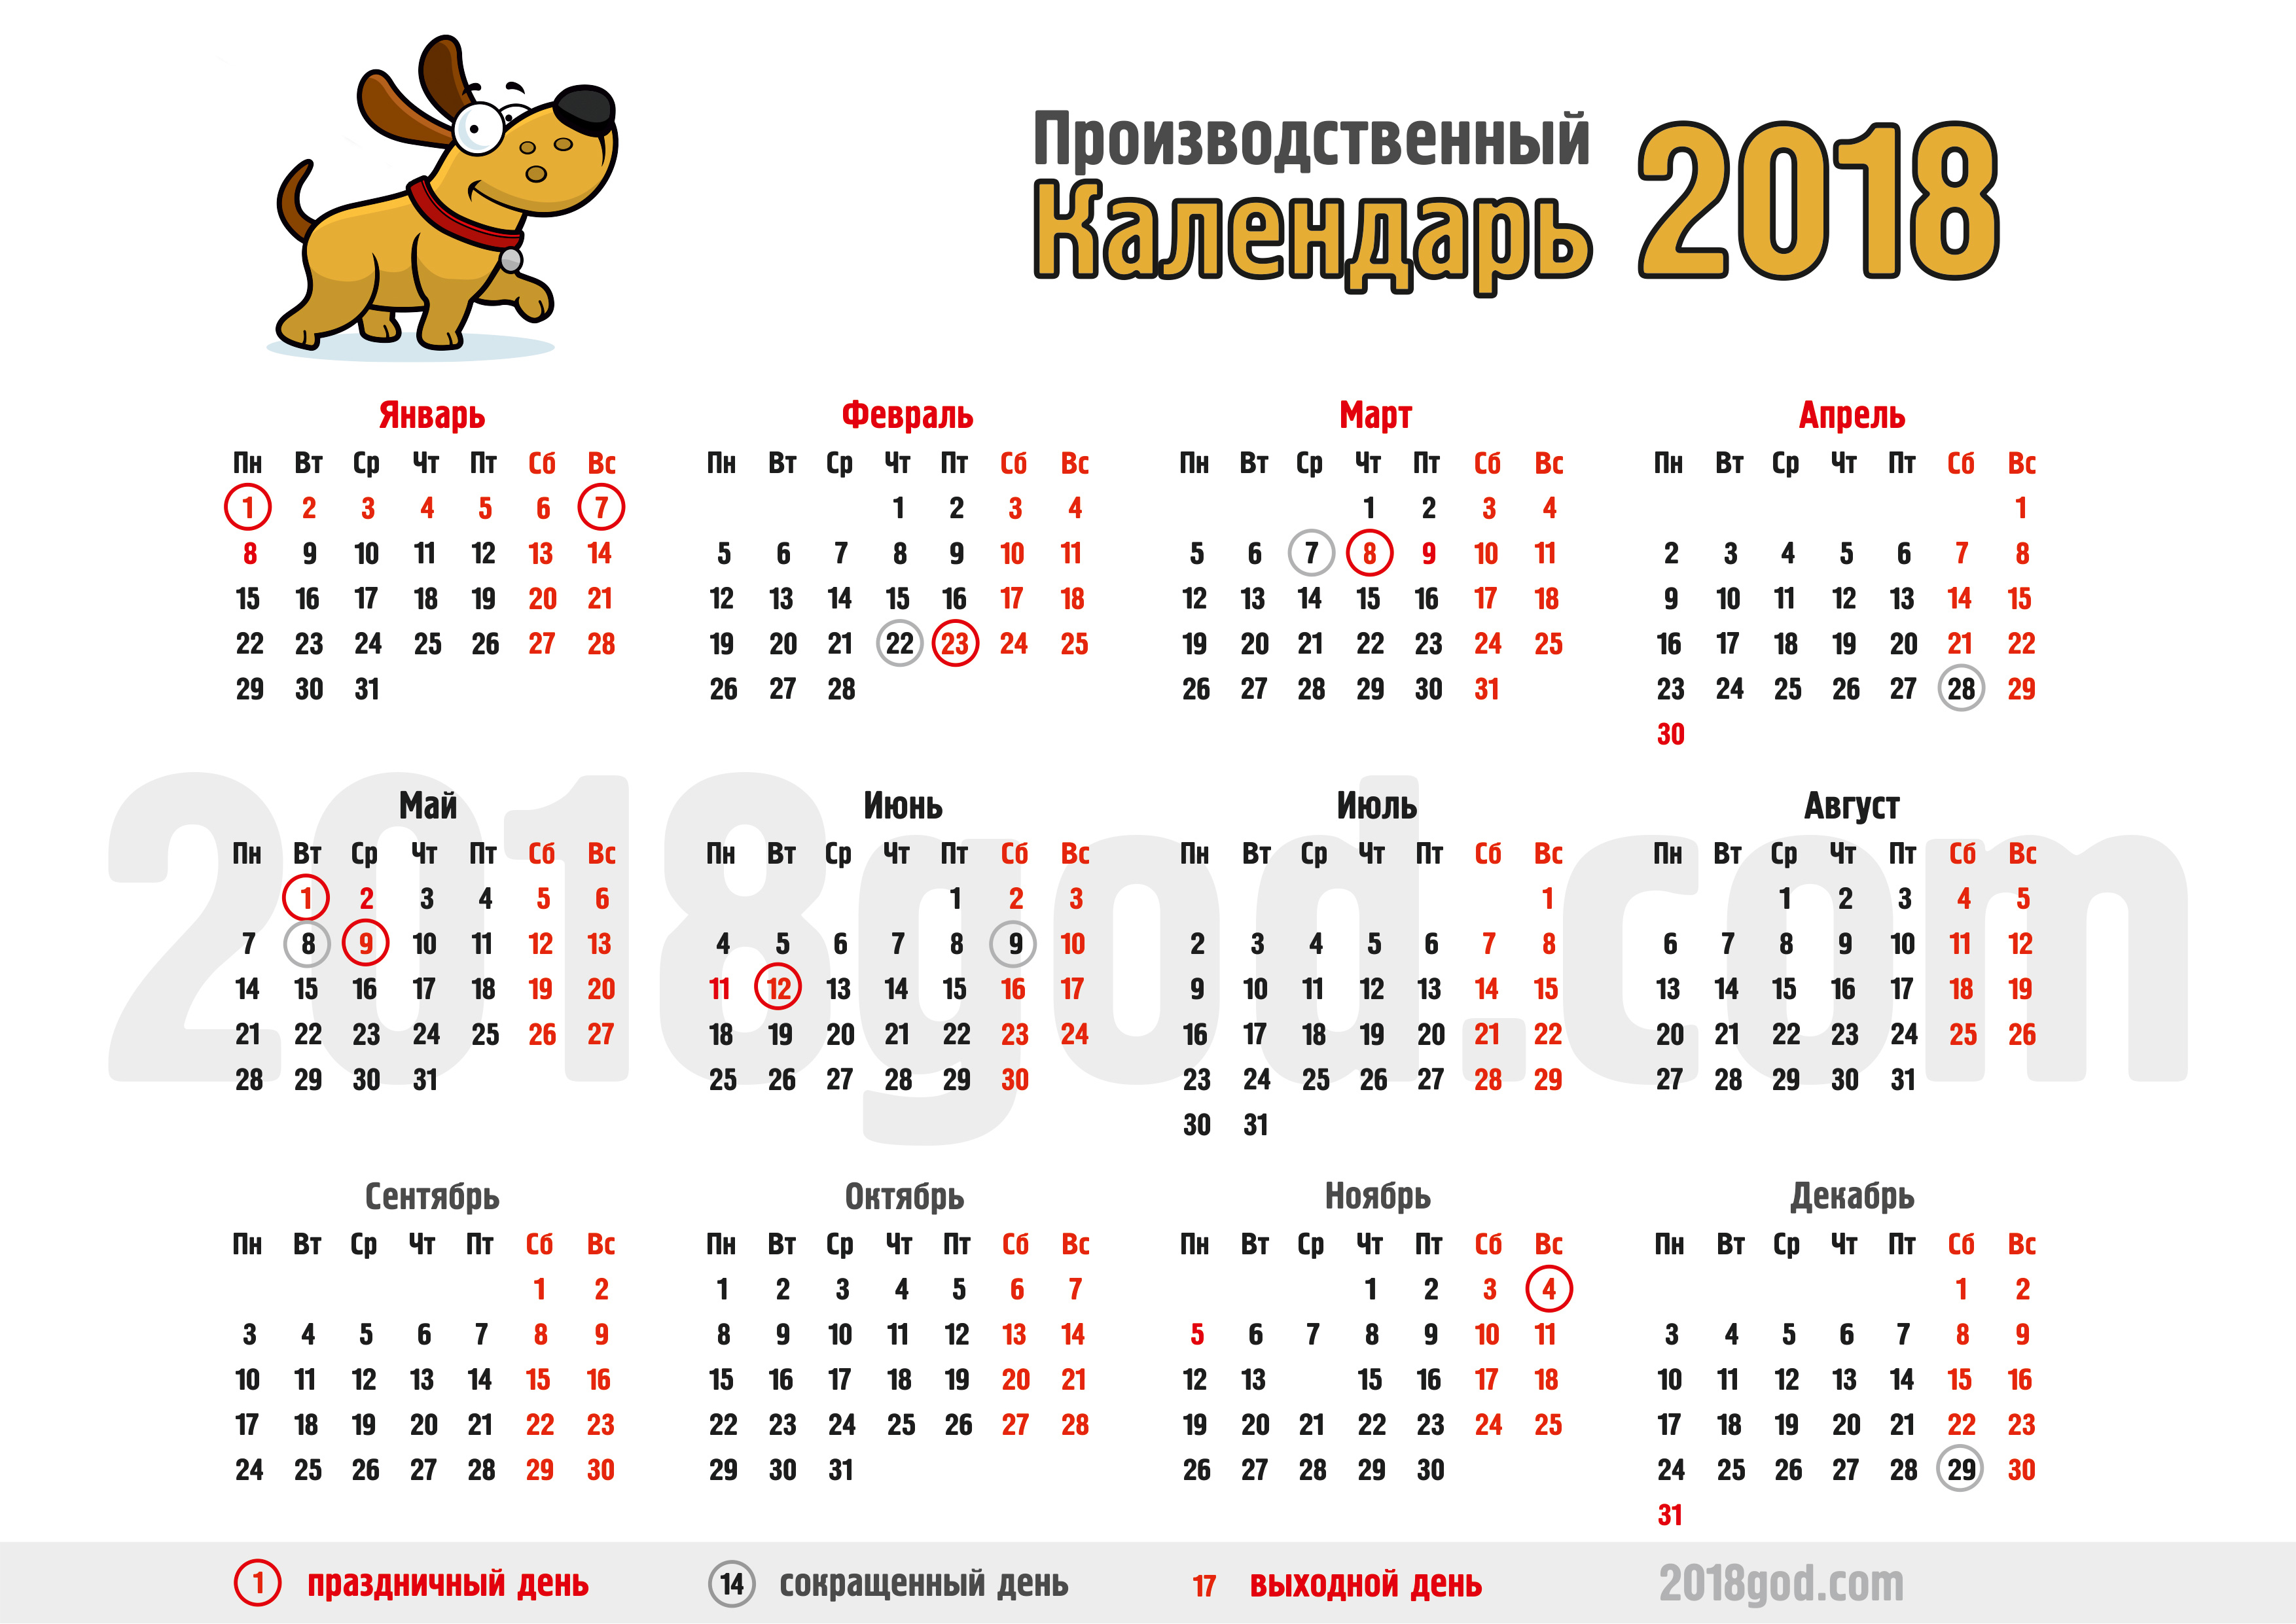 proizvodstvenniy-calendar-2018.jpg